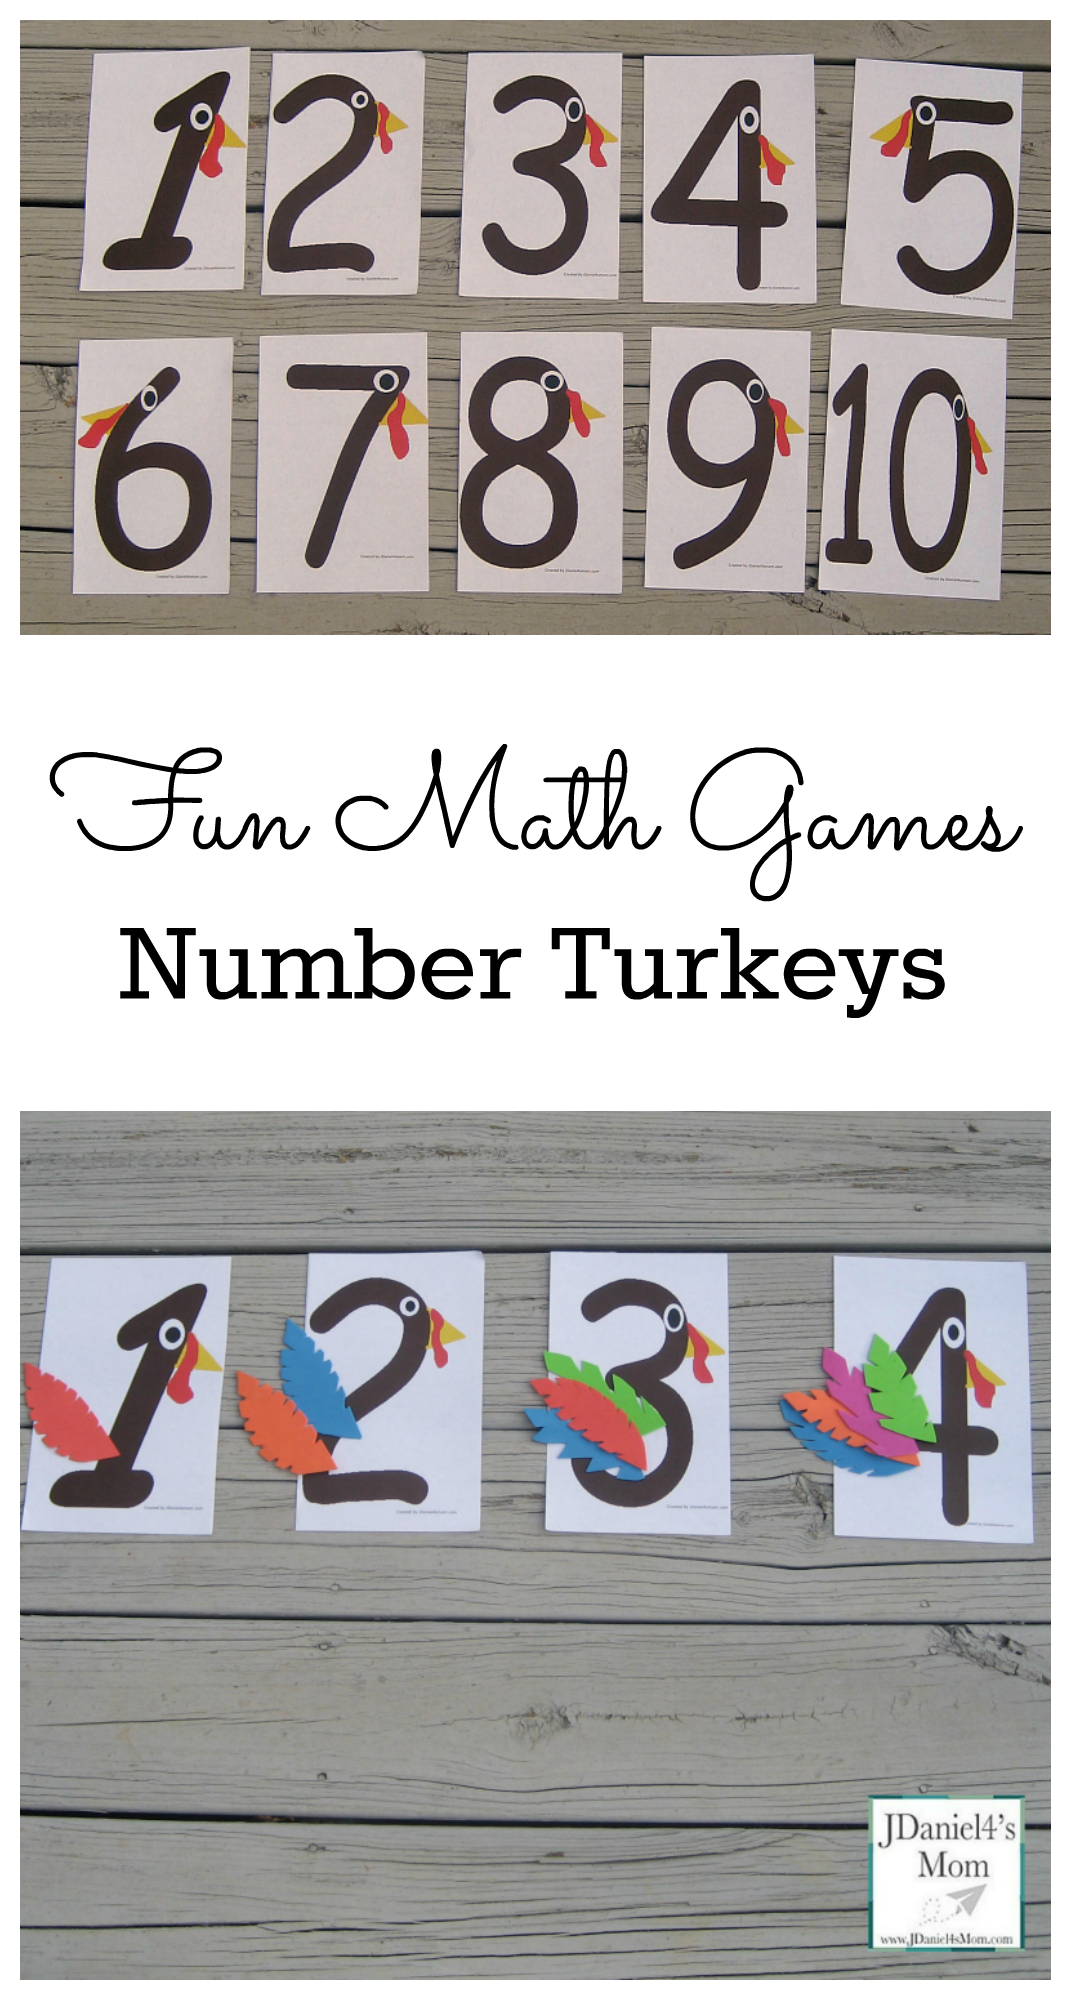 Fun Math Games Number Turkeys